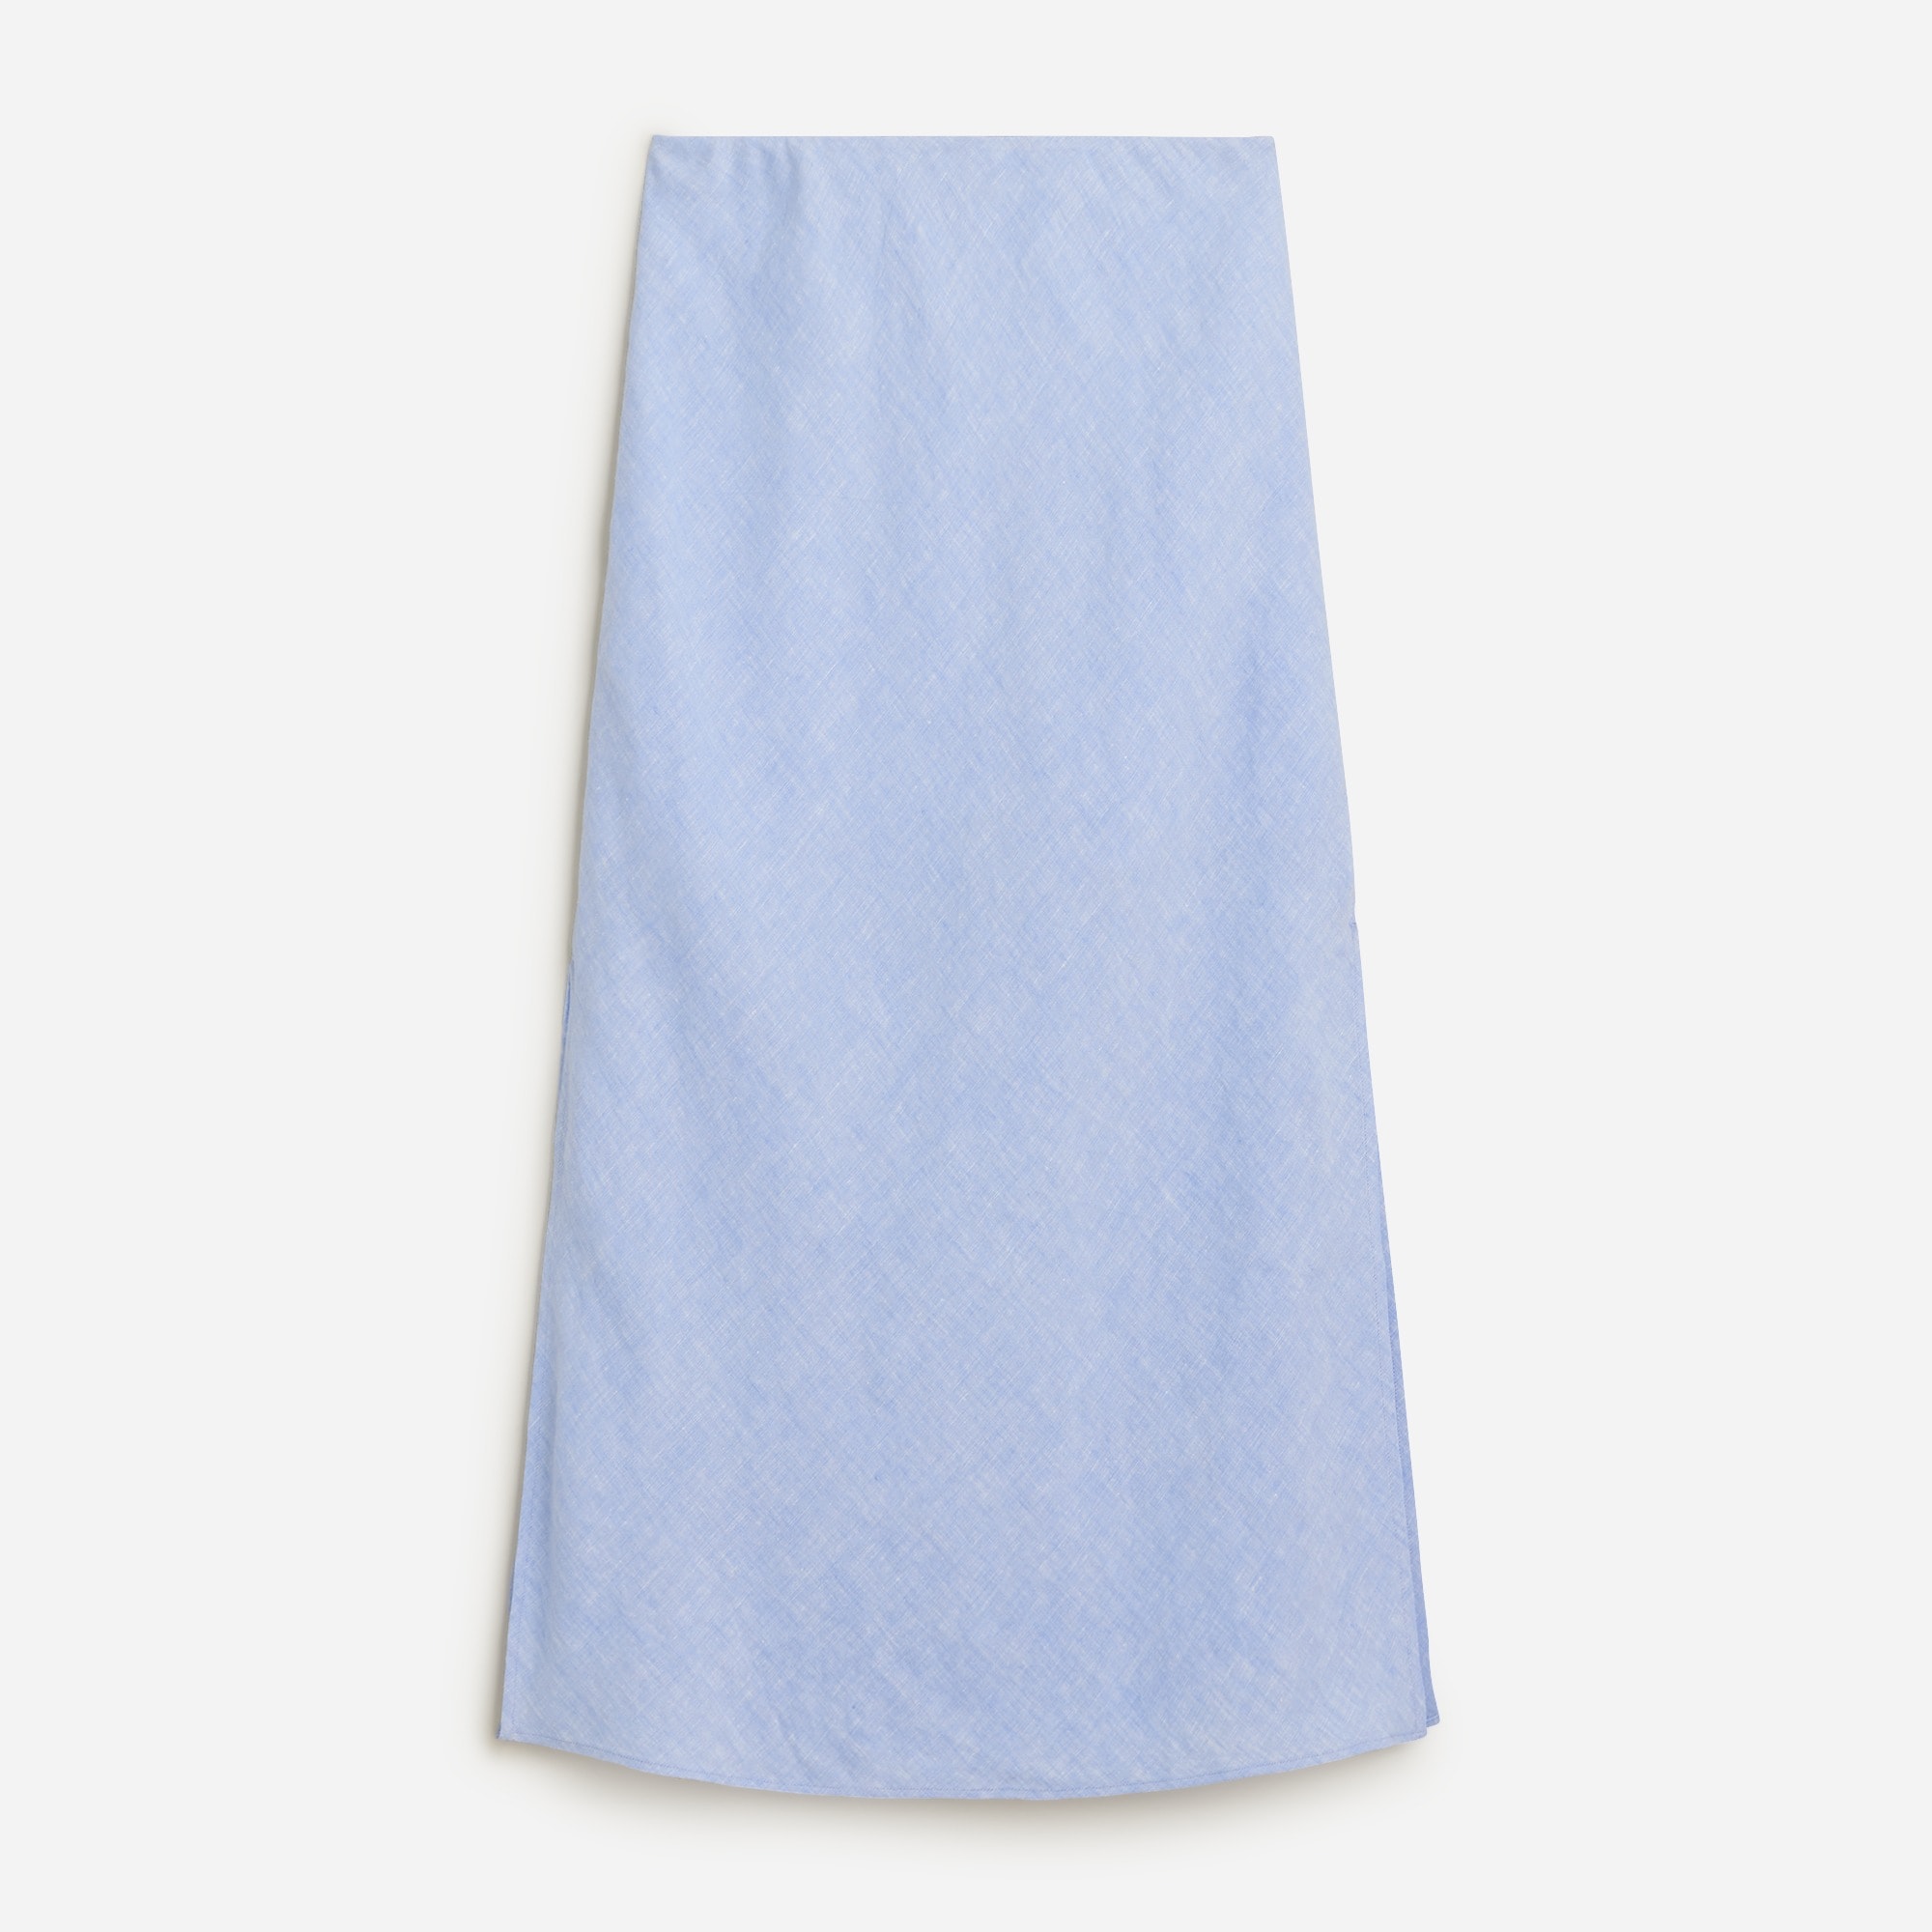  Gwyneth slip skirt in linen